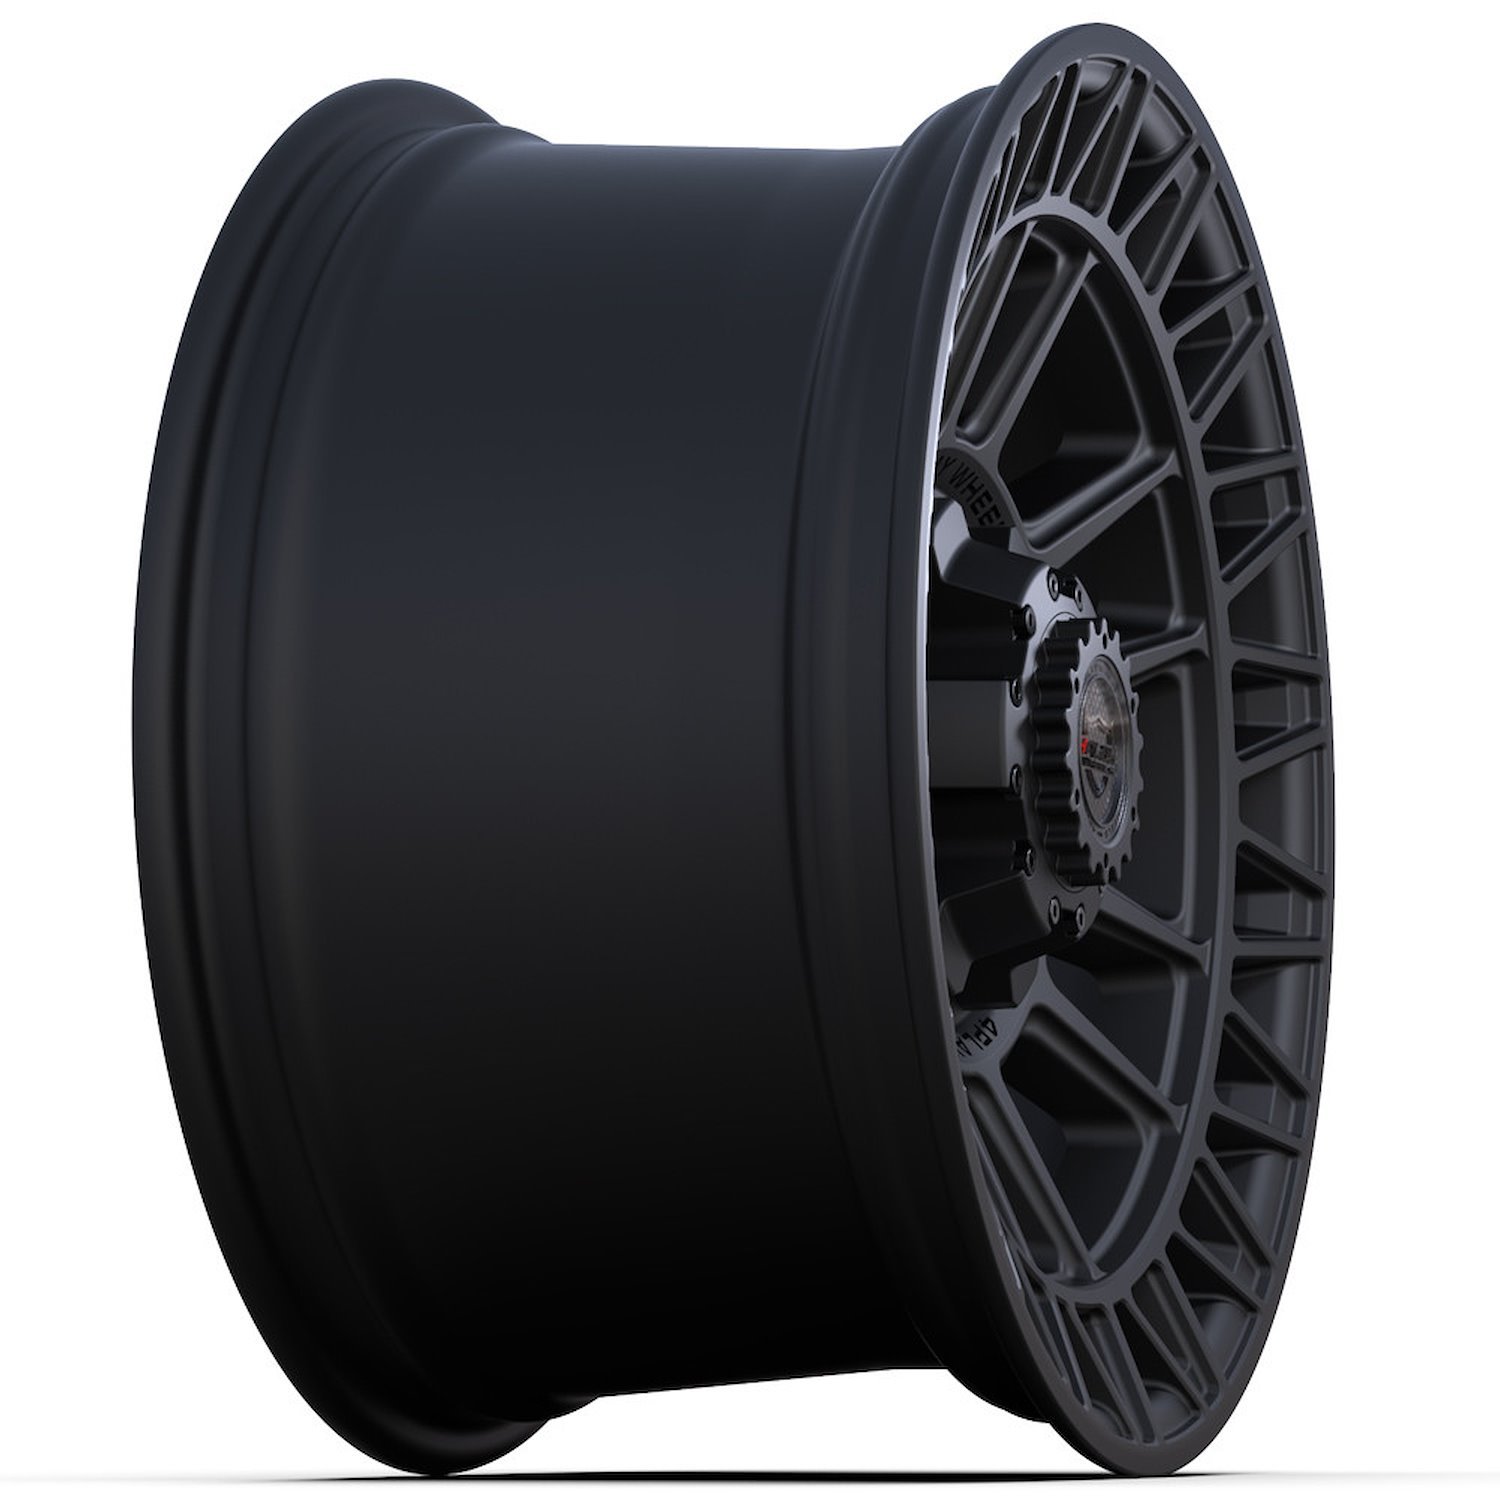 4Play S12 Satin Black Wheel Size: 17